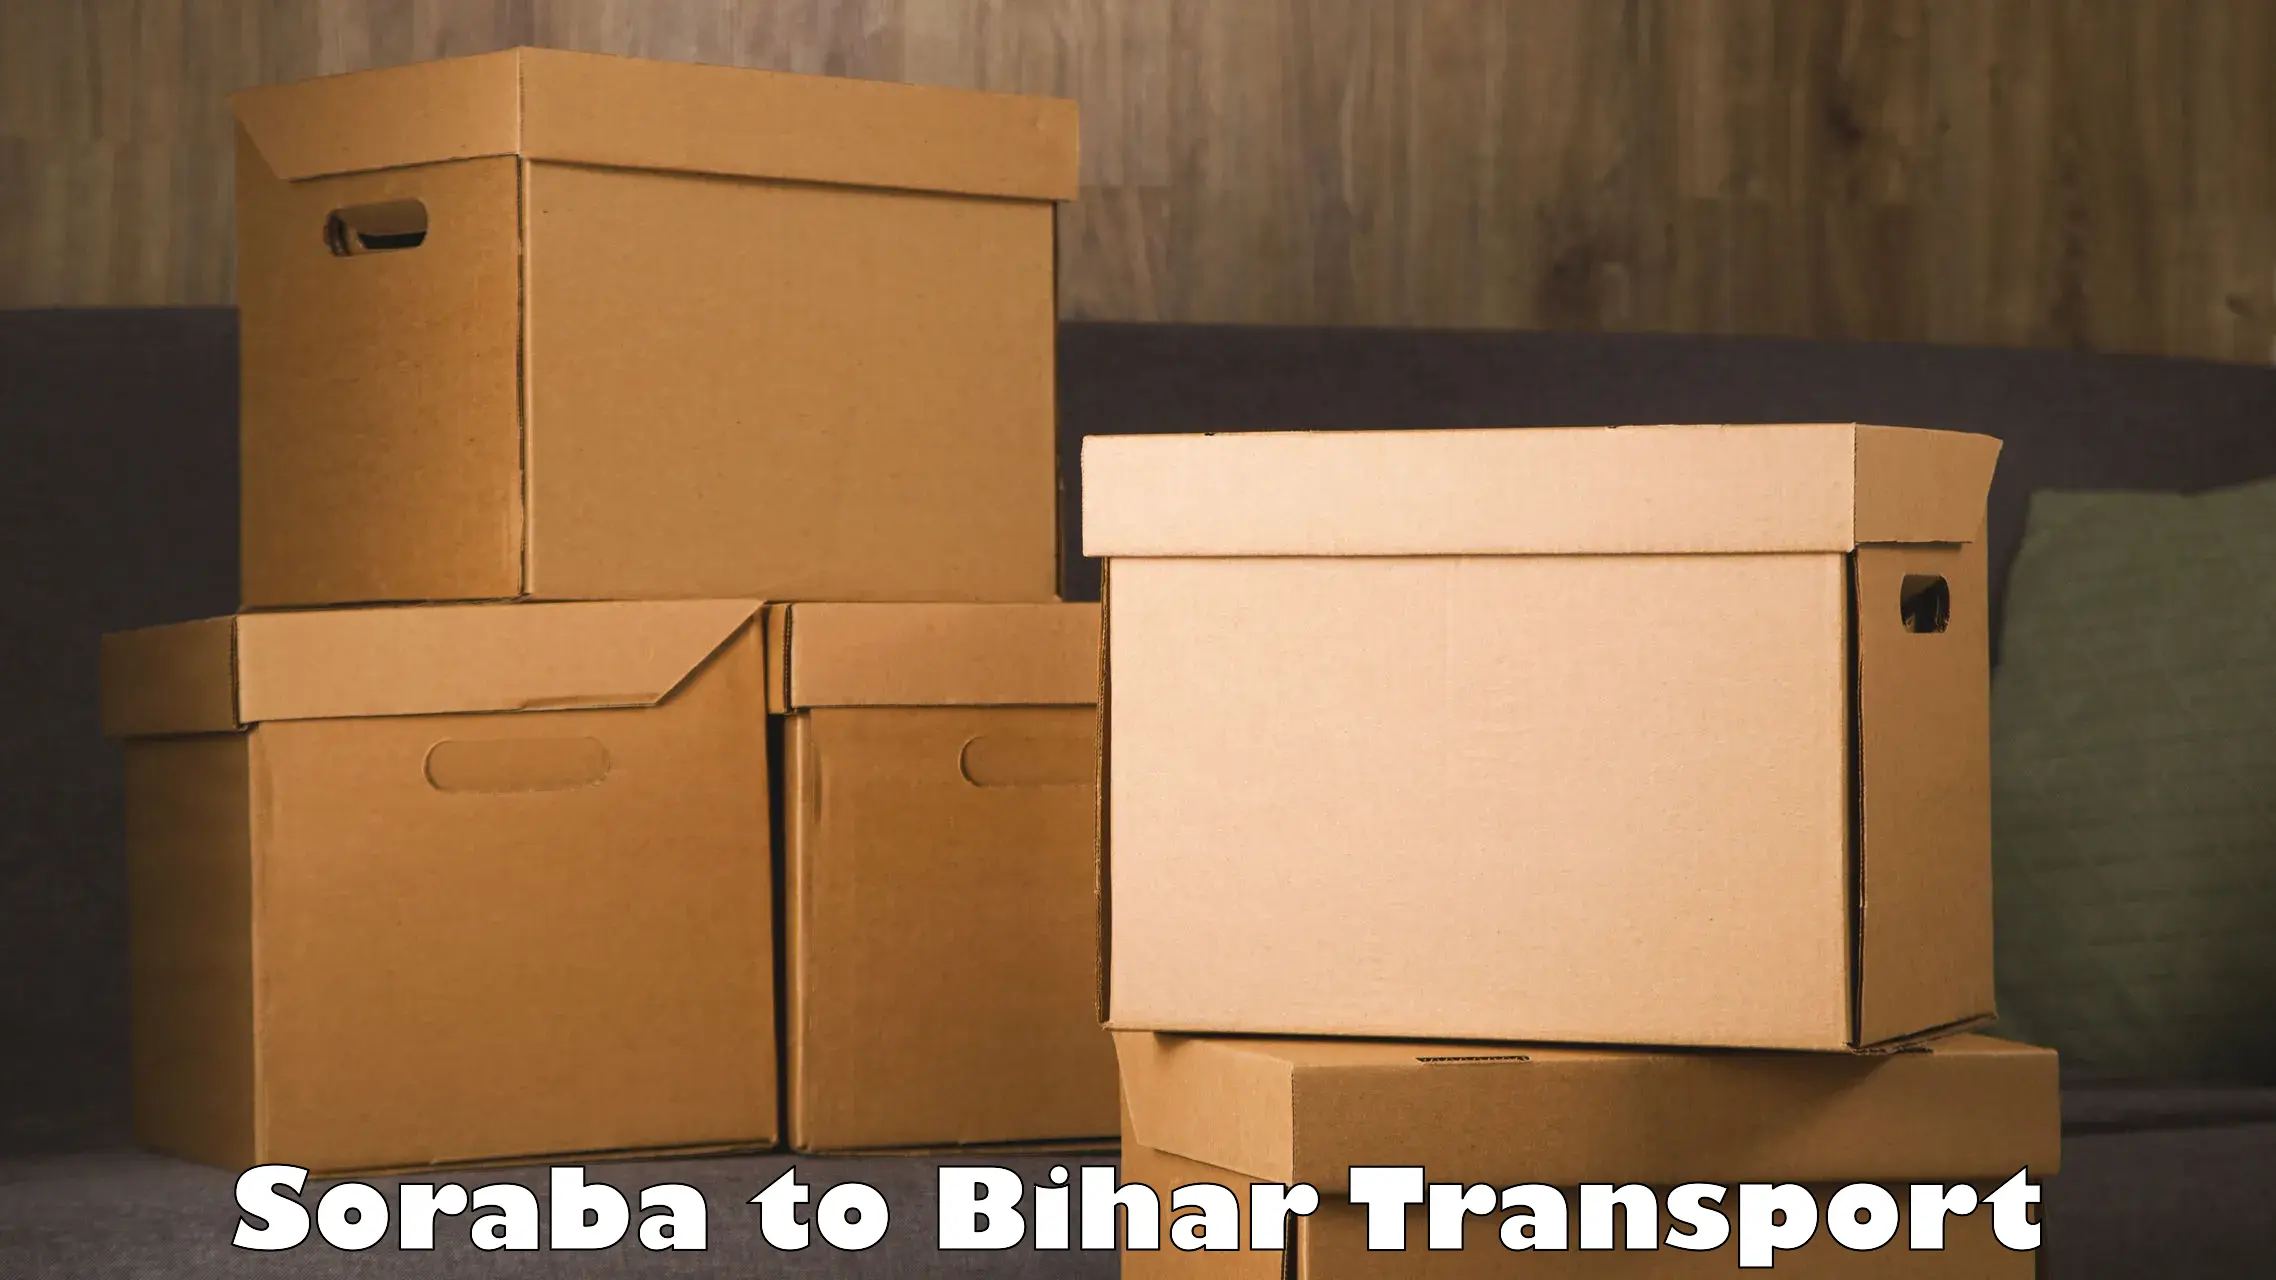 Bike transport service Soraba to Bihar